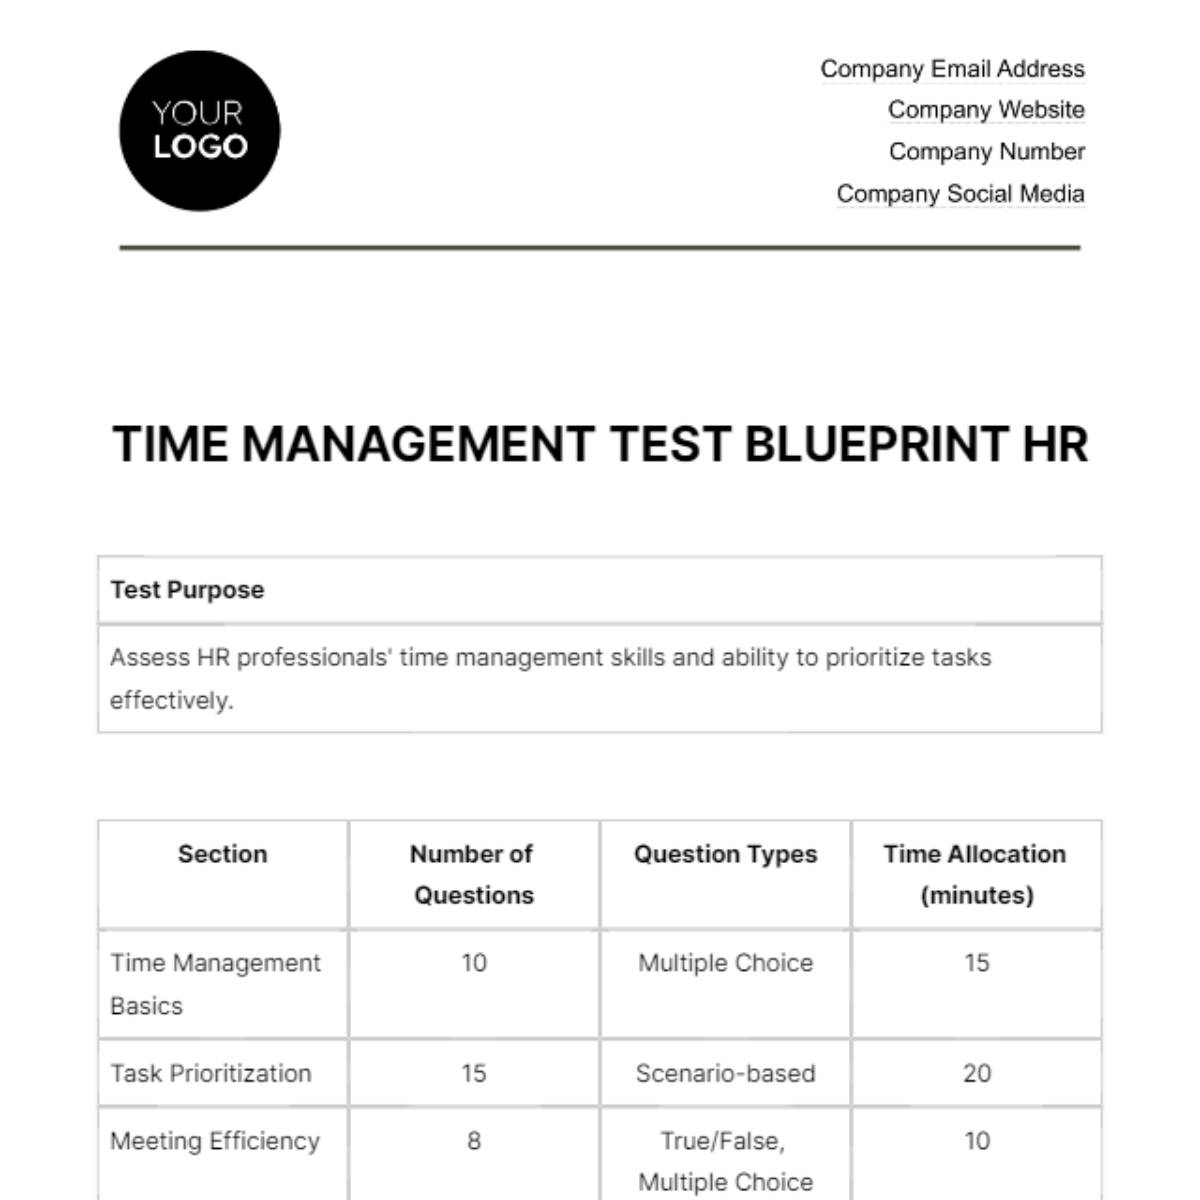 Free Time Management Test Blueprint HR Template